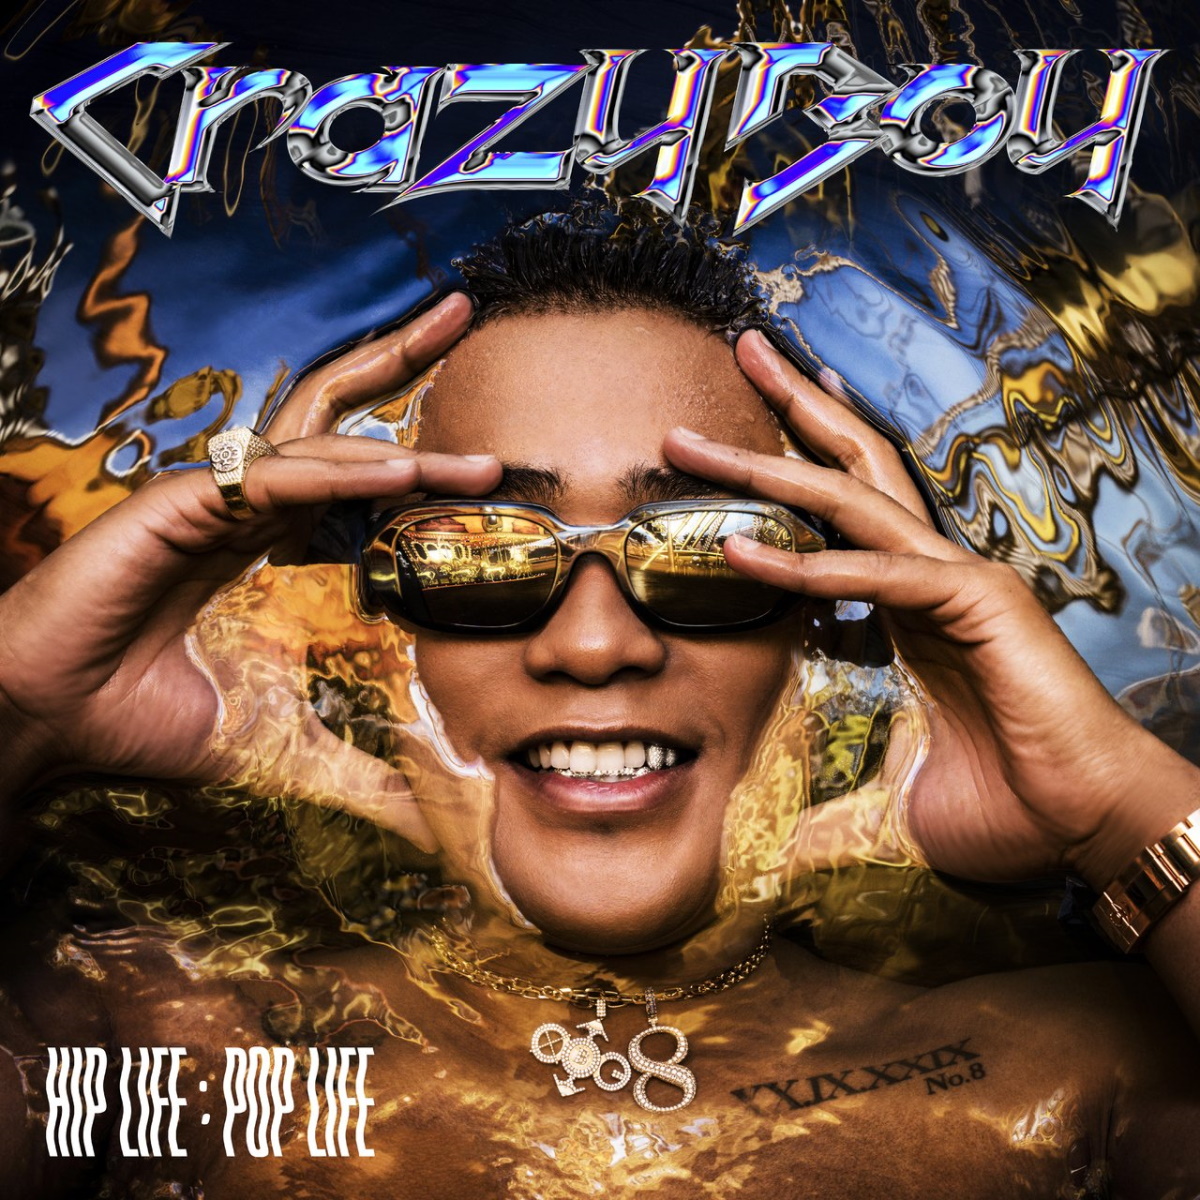 『CrazyBoy - Pure Water 歌詞』収録の『HIP LIFE：POP LIFE』ジャケット